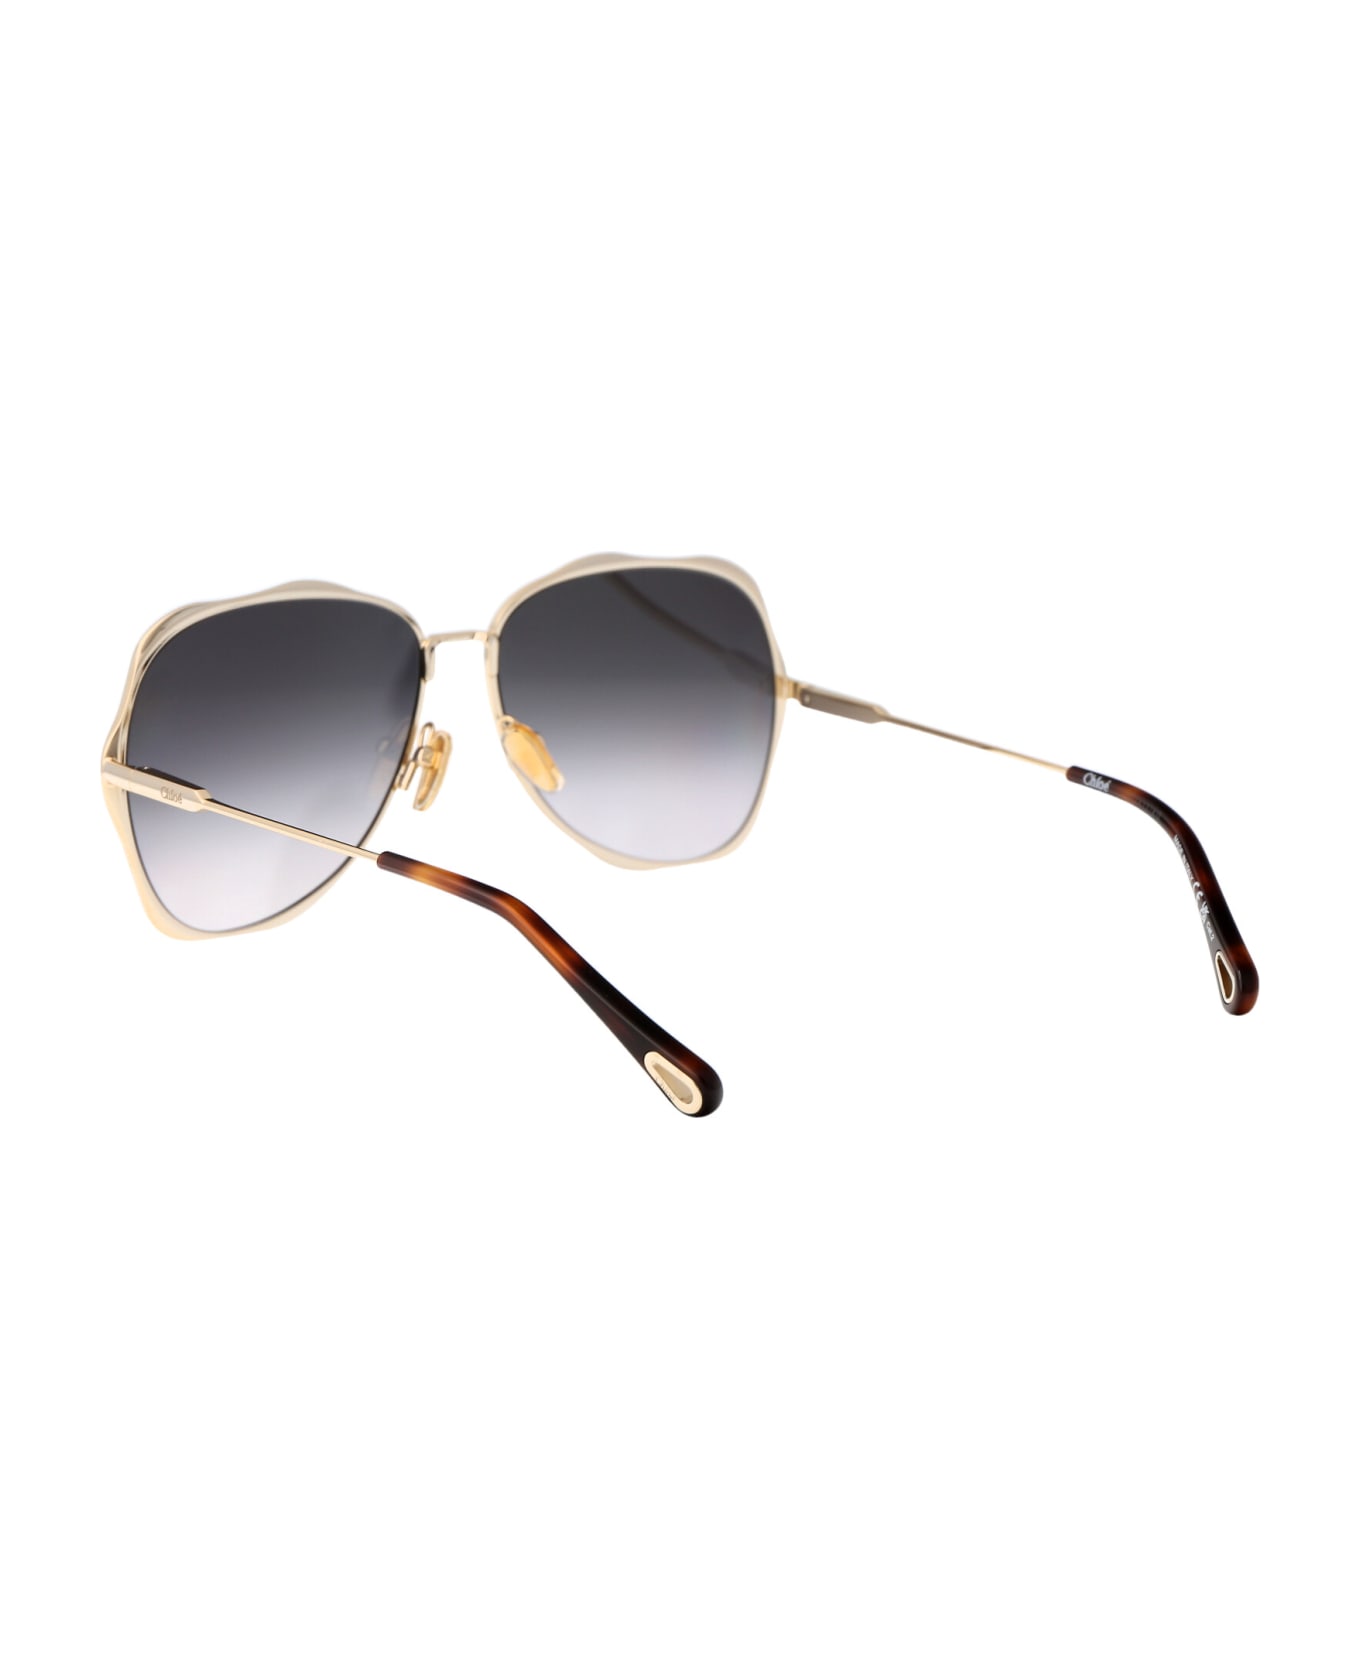 Chloé Eyewear Ch0183s Sunglasses - 001 GOLD GOLD GREY サングラス